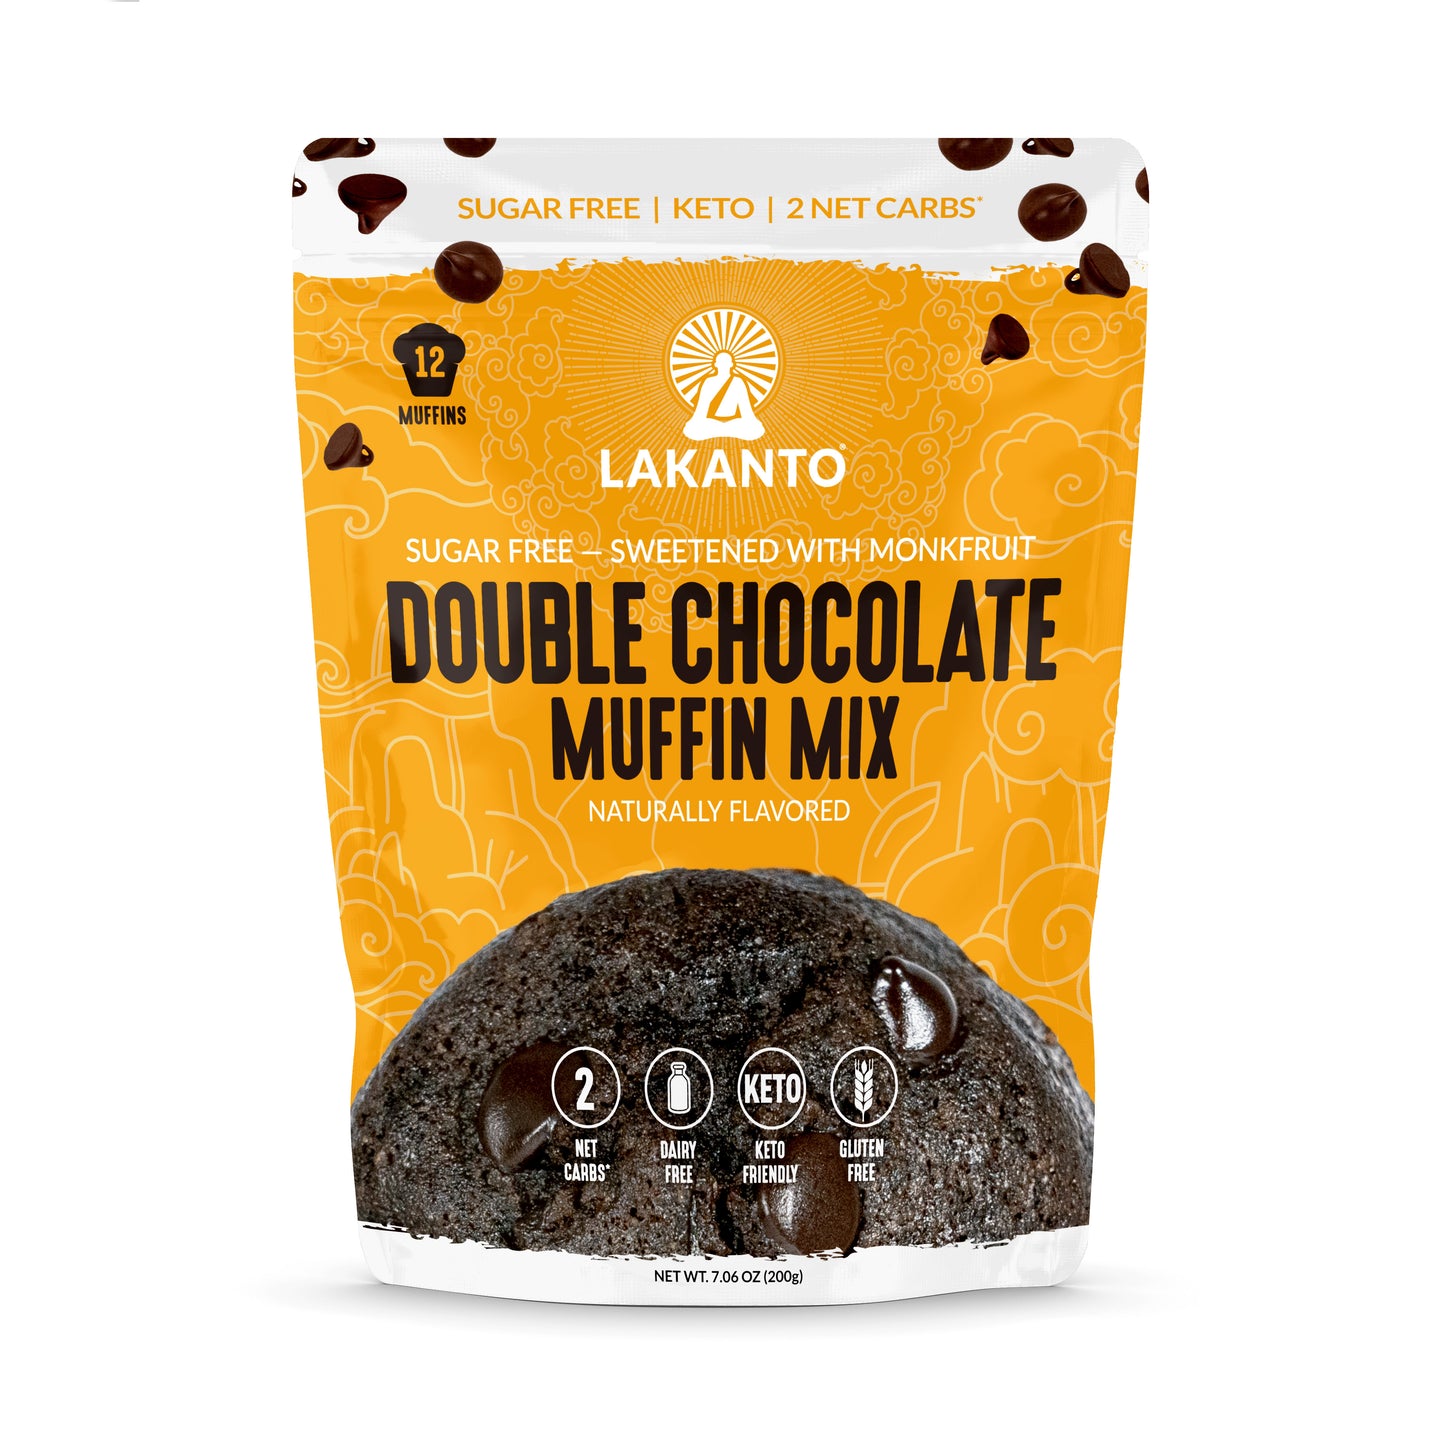 Sugar-Free Double Chocolate Muffin Mix